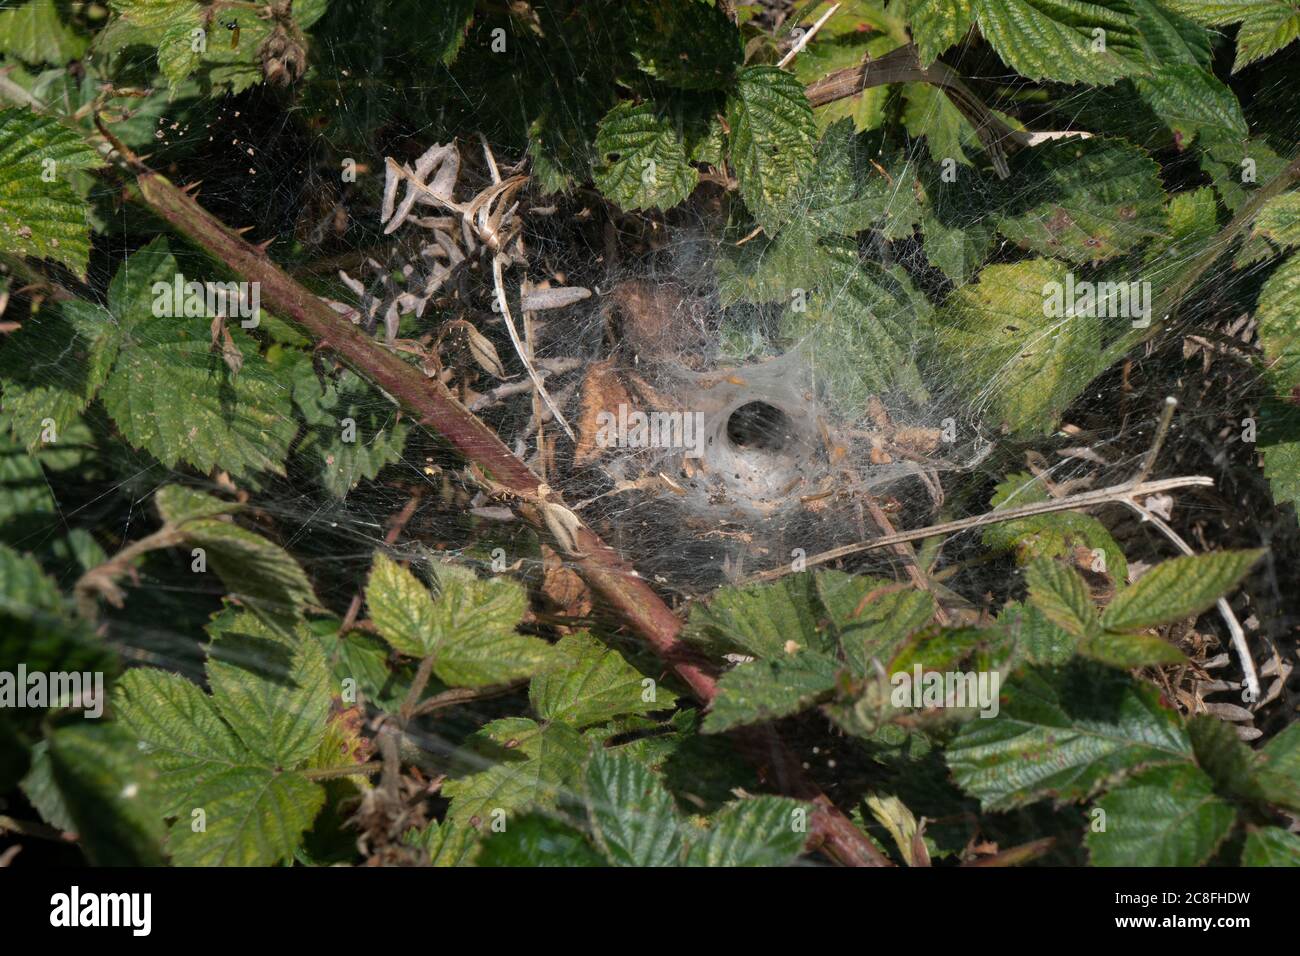 Spider web amongst bramble leaves. Staffordshire. UK Stock Photo